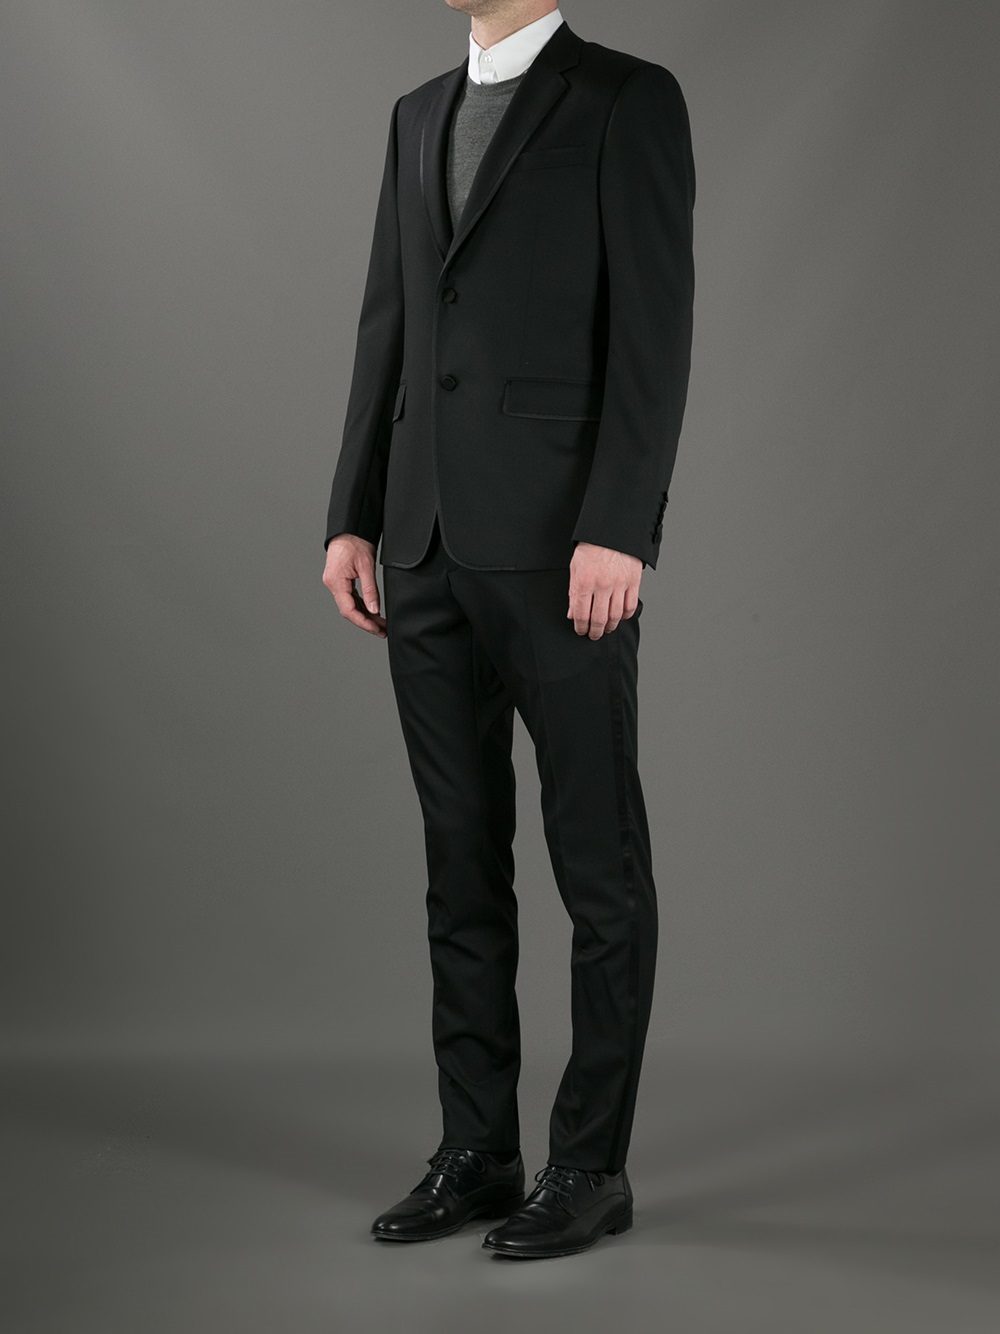 Lyst - Gucci Tuxedo Suit in Black for Men